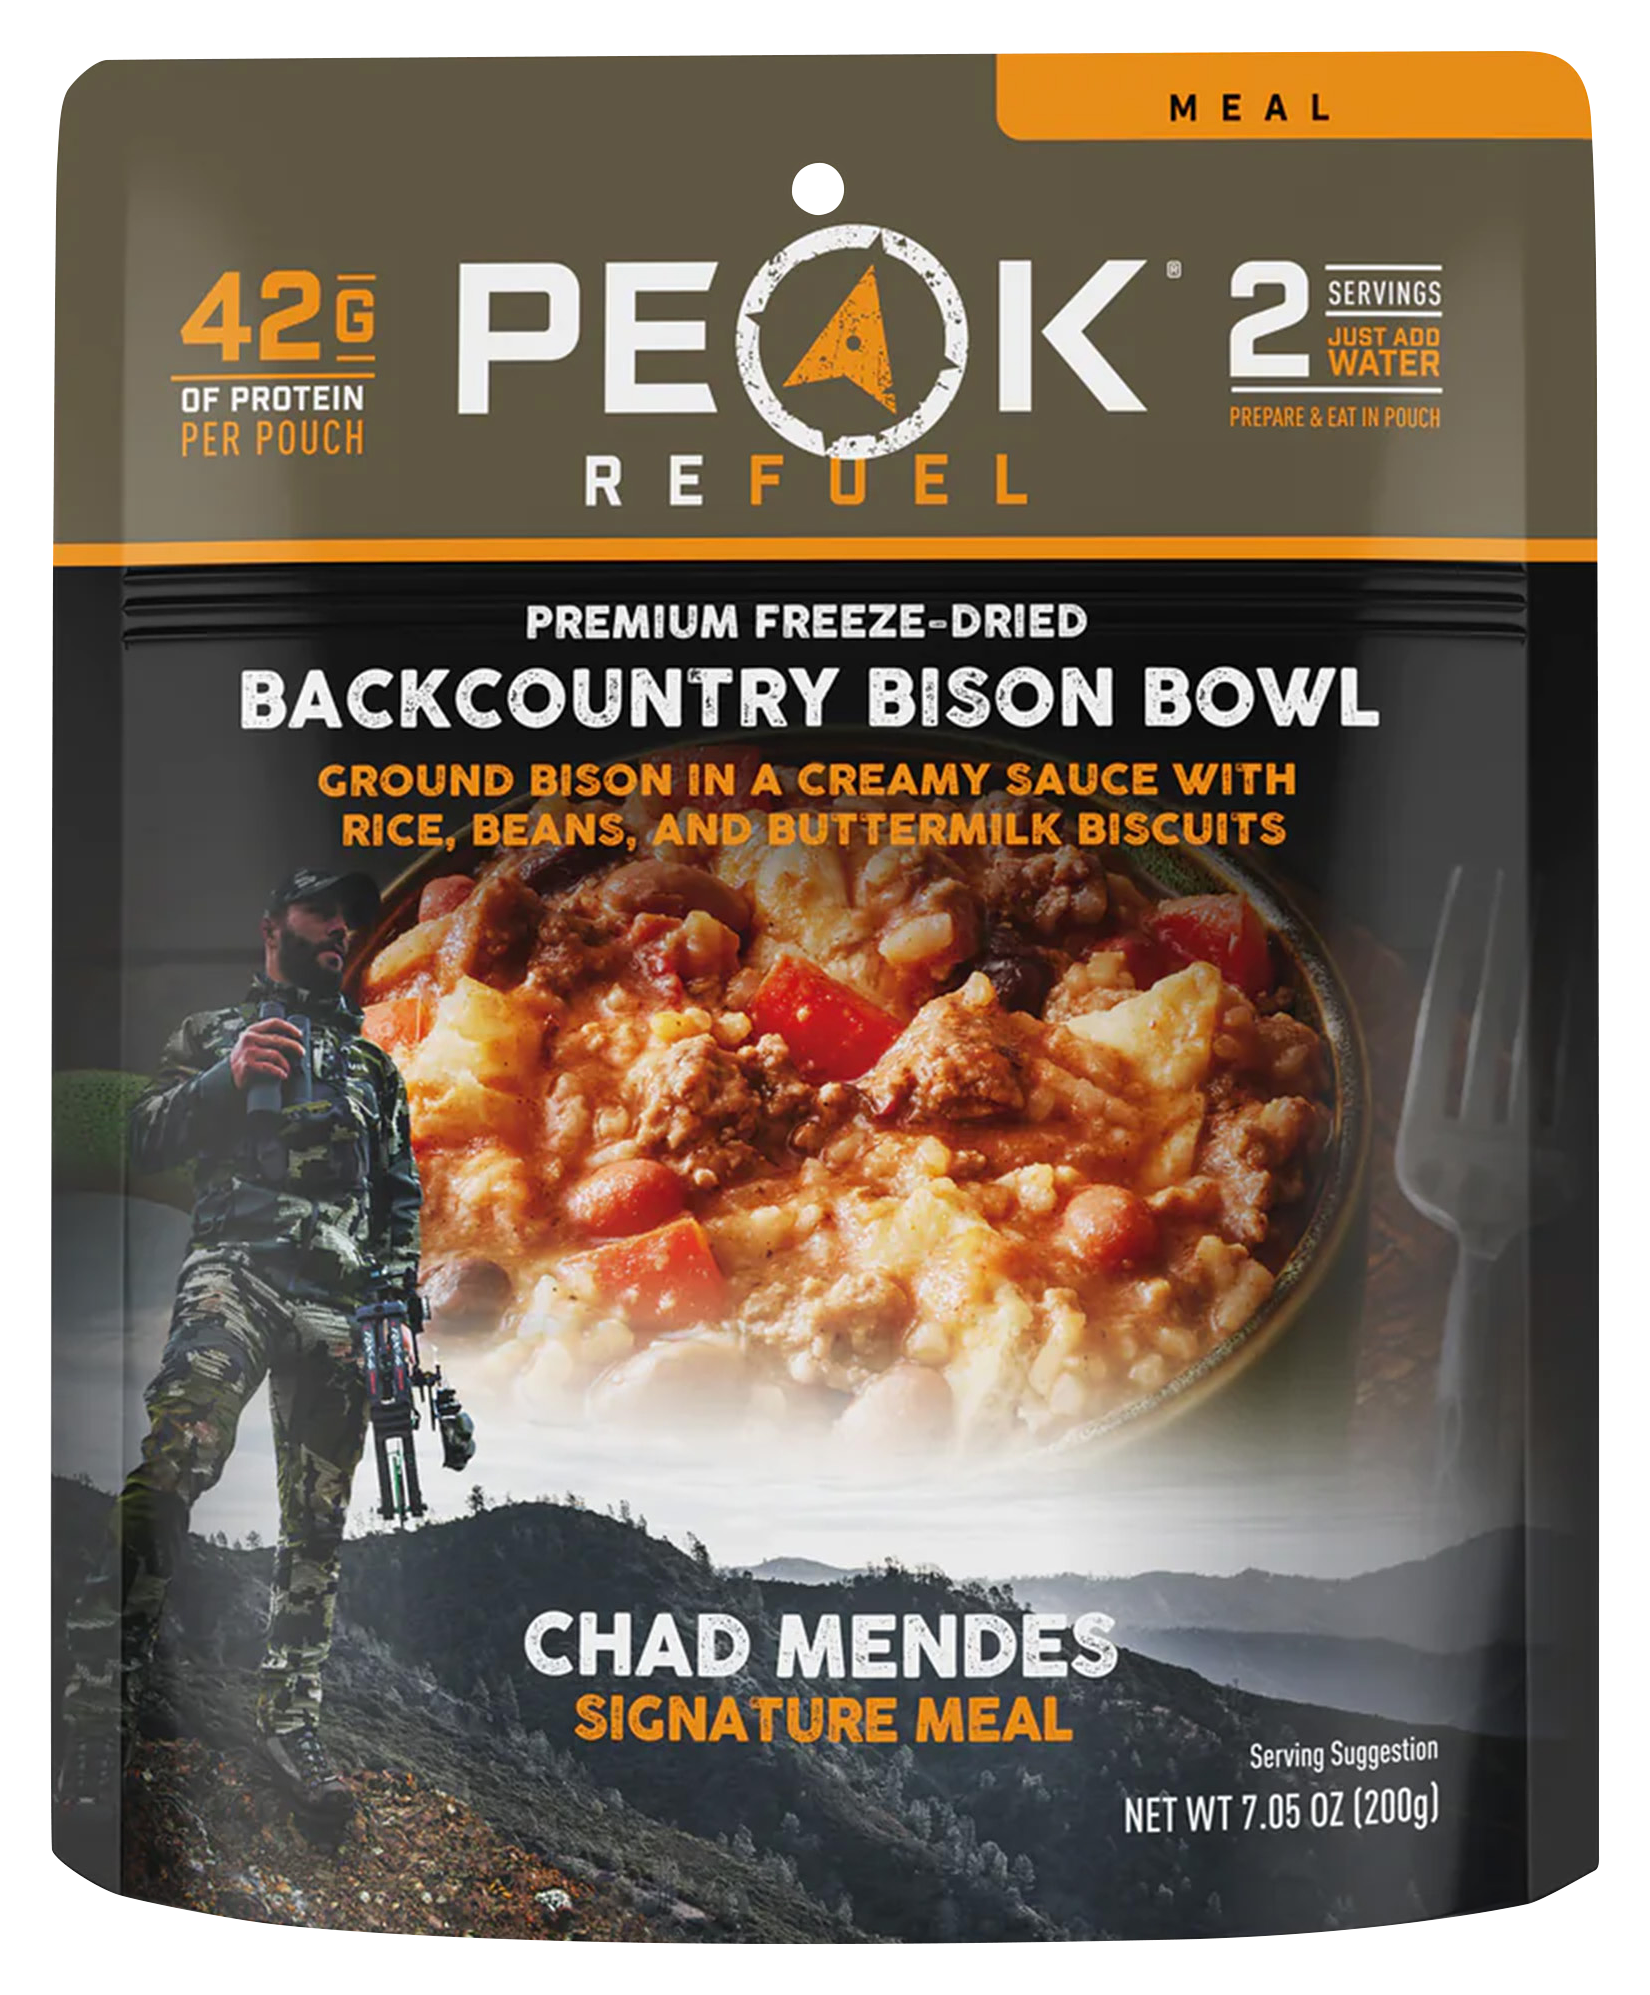 Peak Refuel Premium Freeze Dried Backcountry Bison Bowl - 2 Servings -  59414